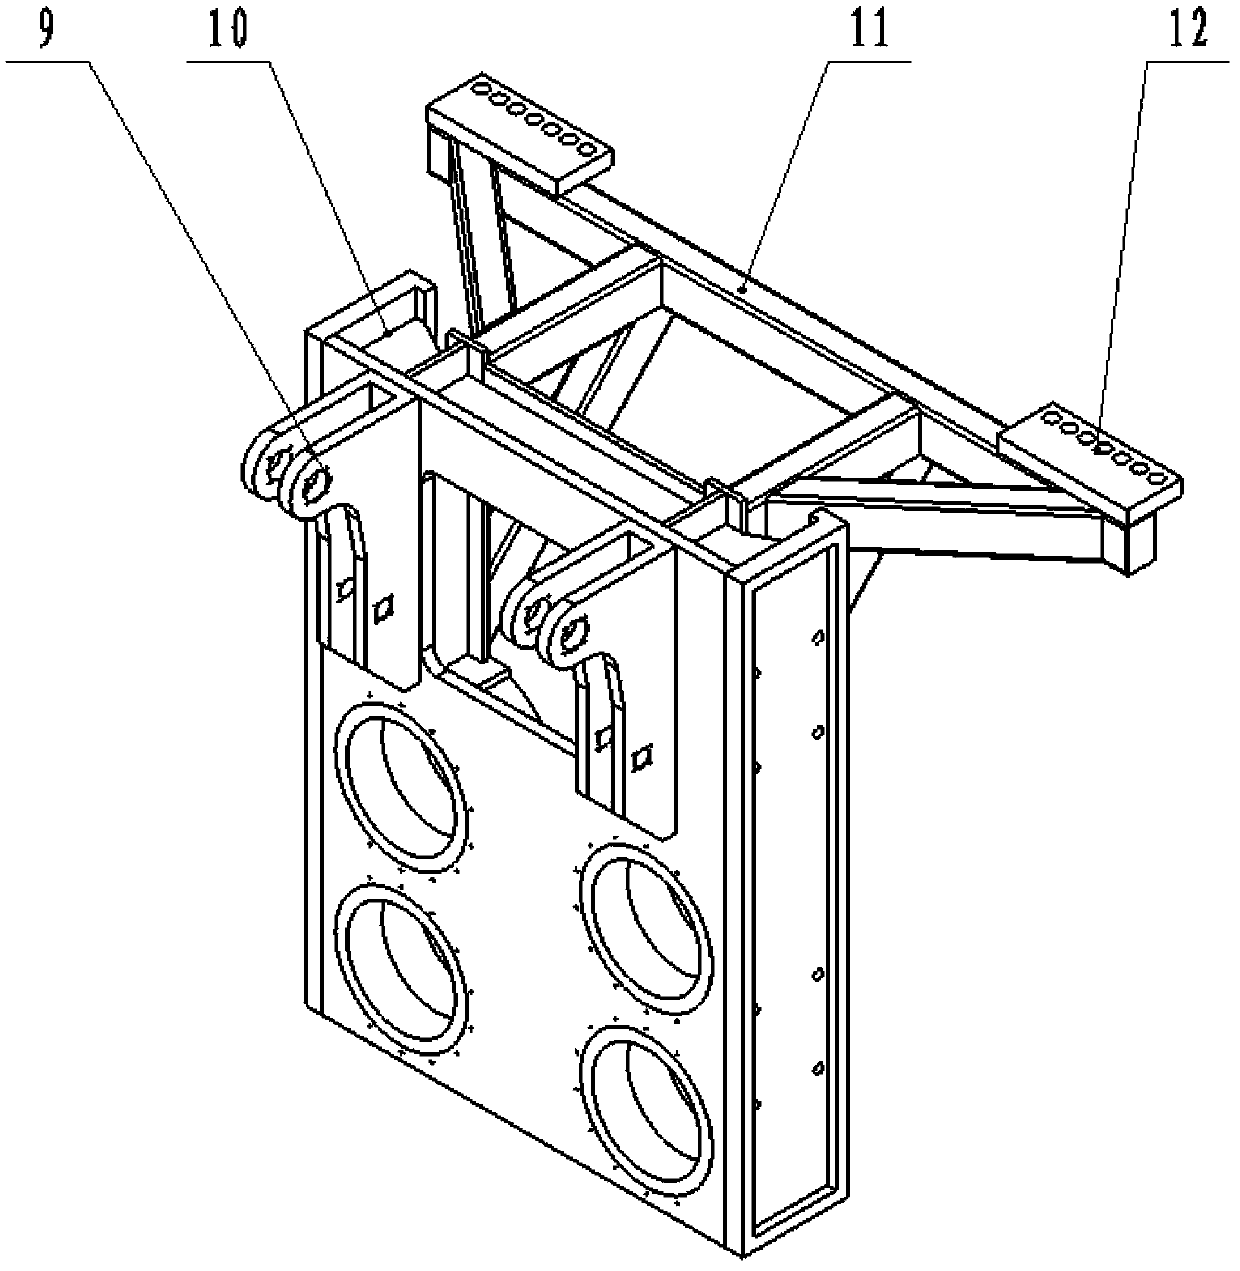 Gear rack coal bed methane drilling rig hoisting system